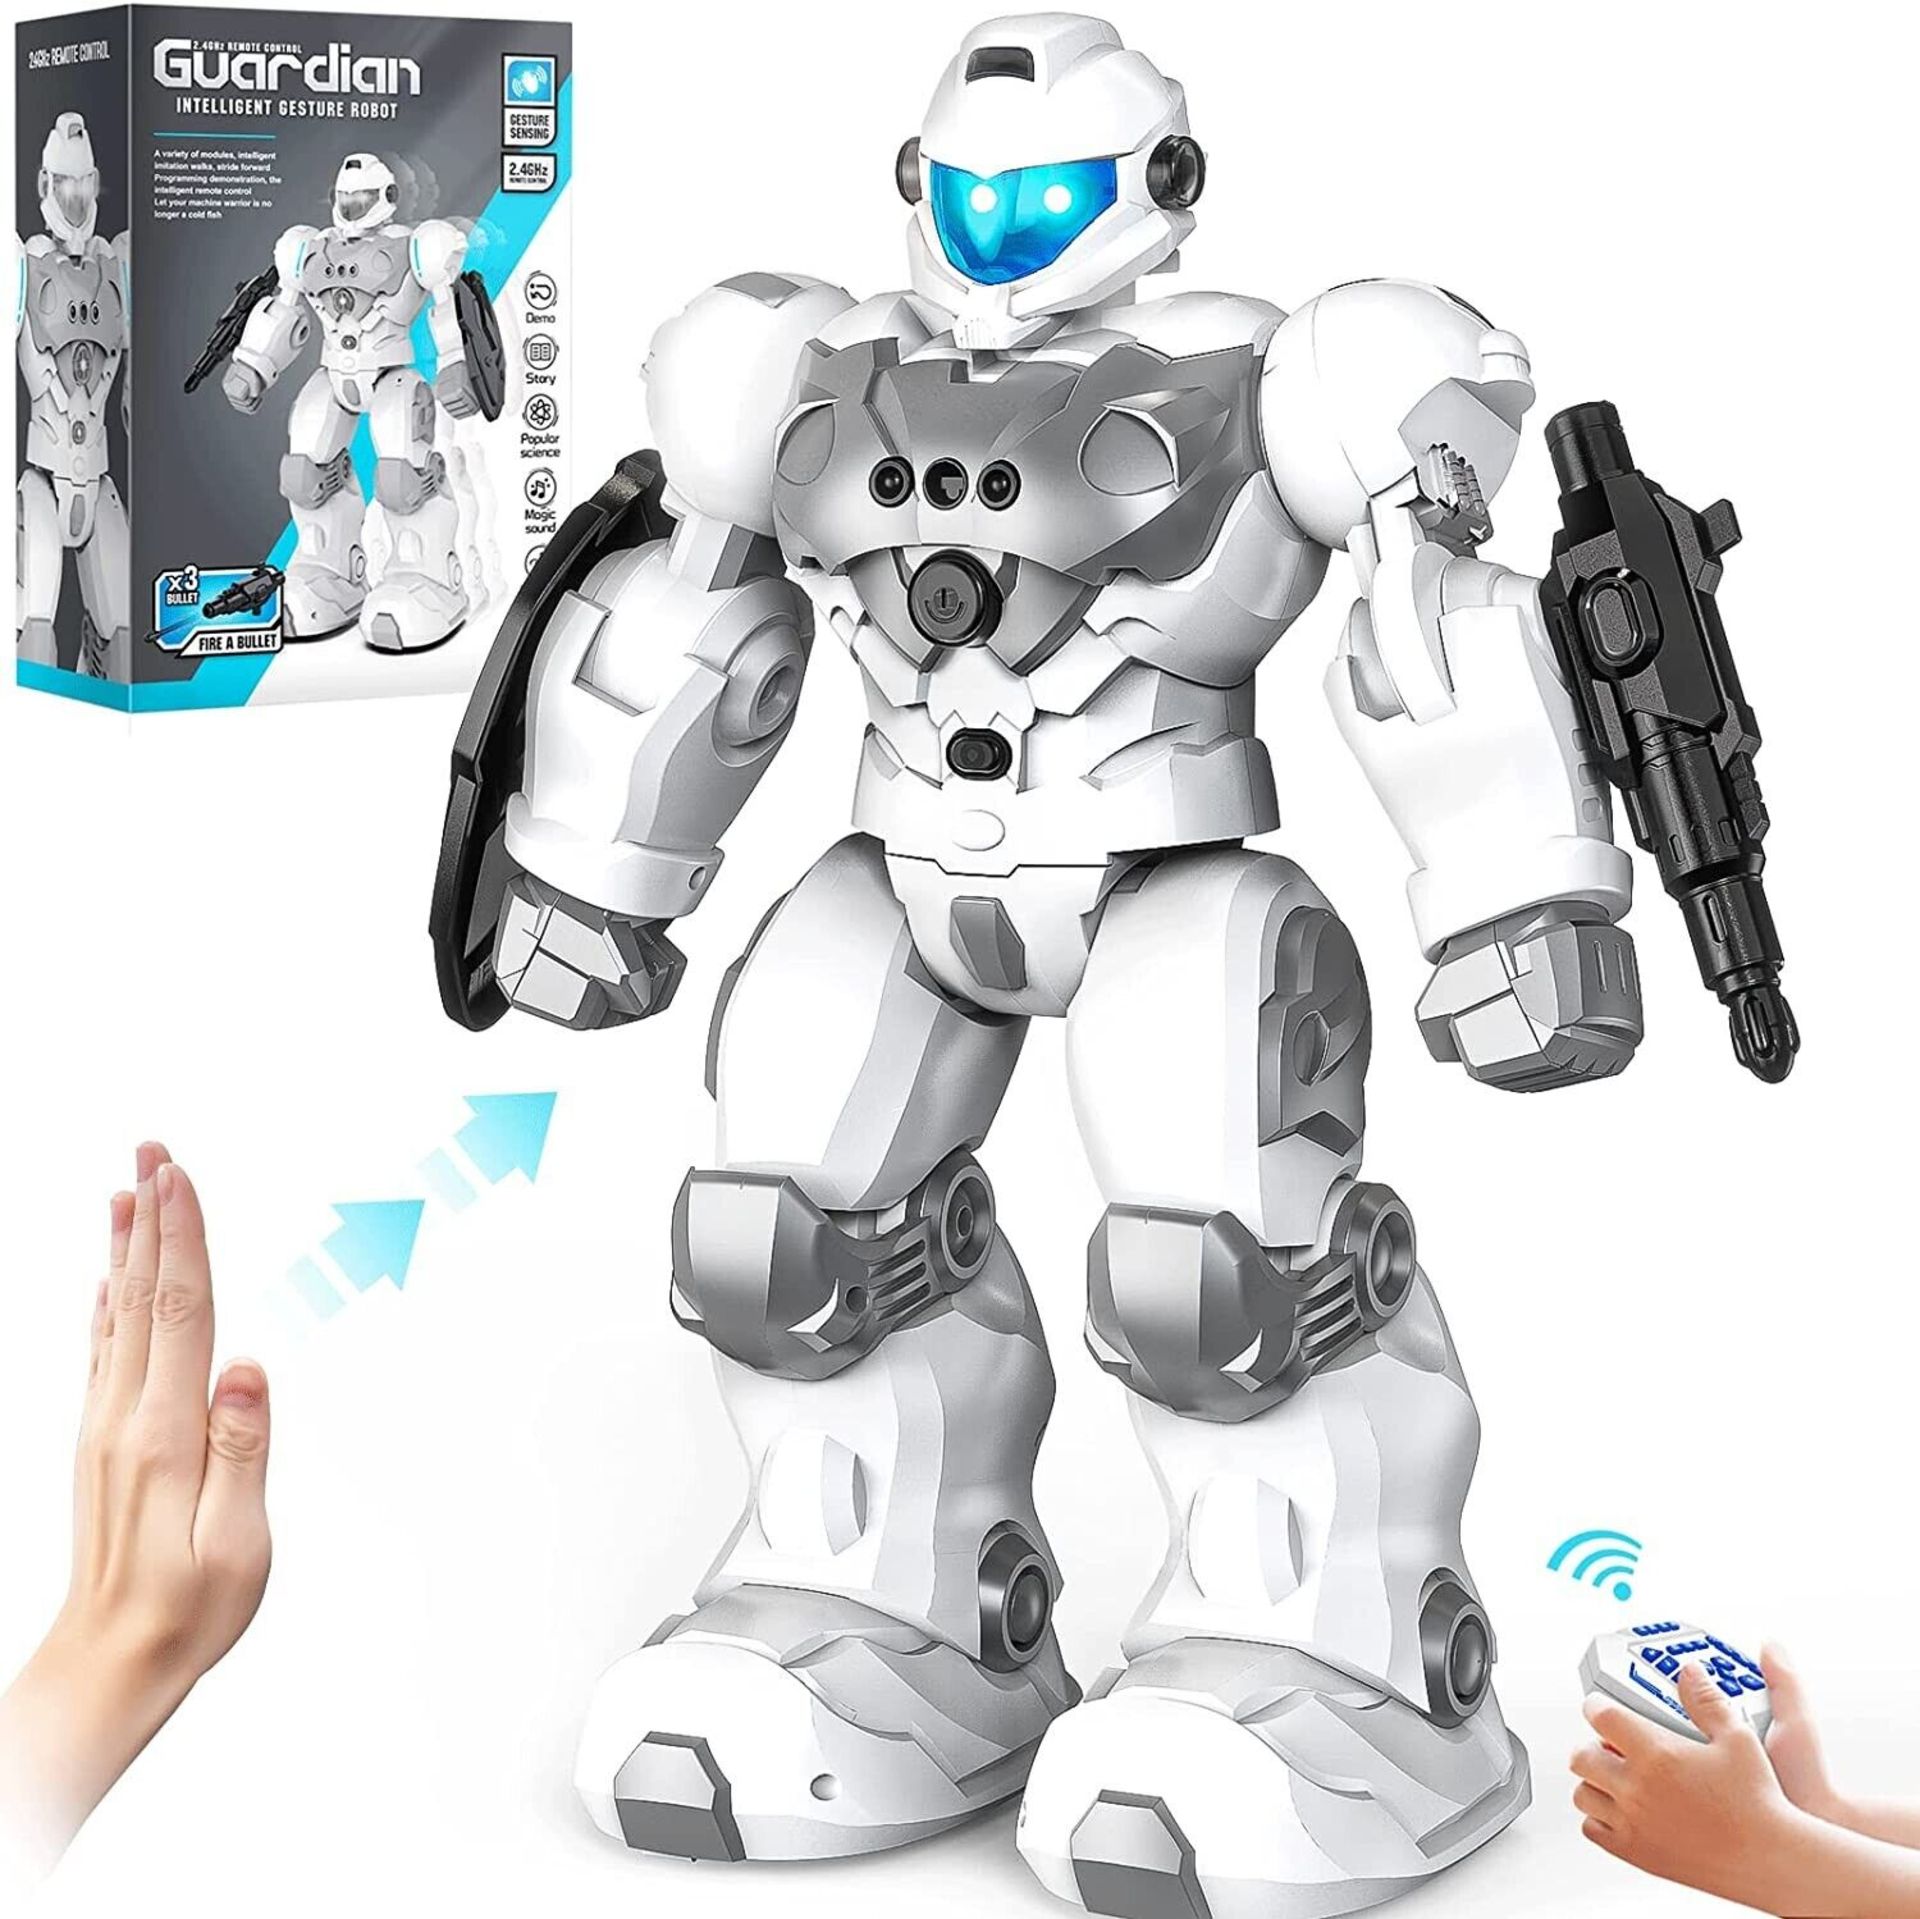 5x Sonomo Guardian Remote Control Intelligent Gesture Robot, White - RRP £200